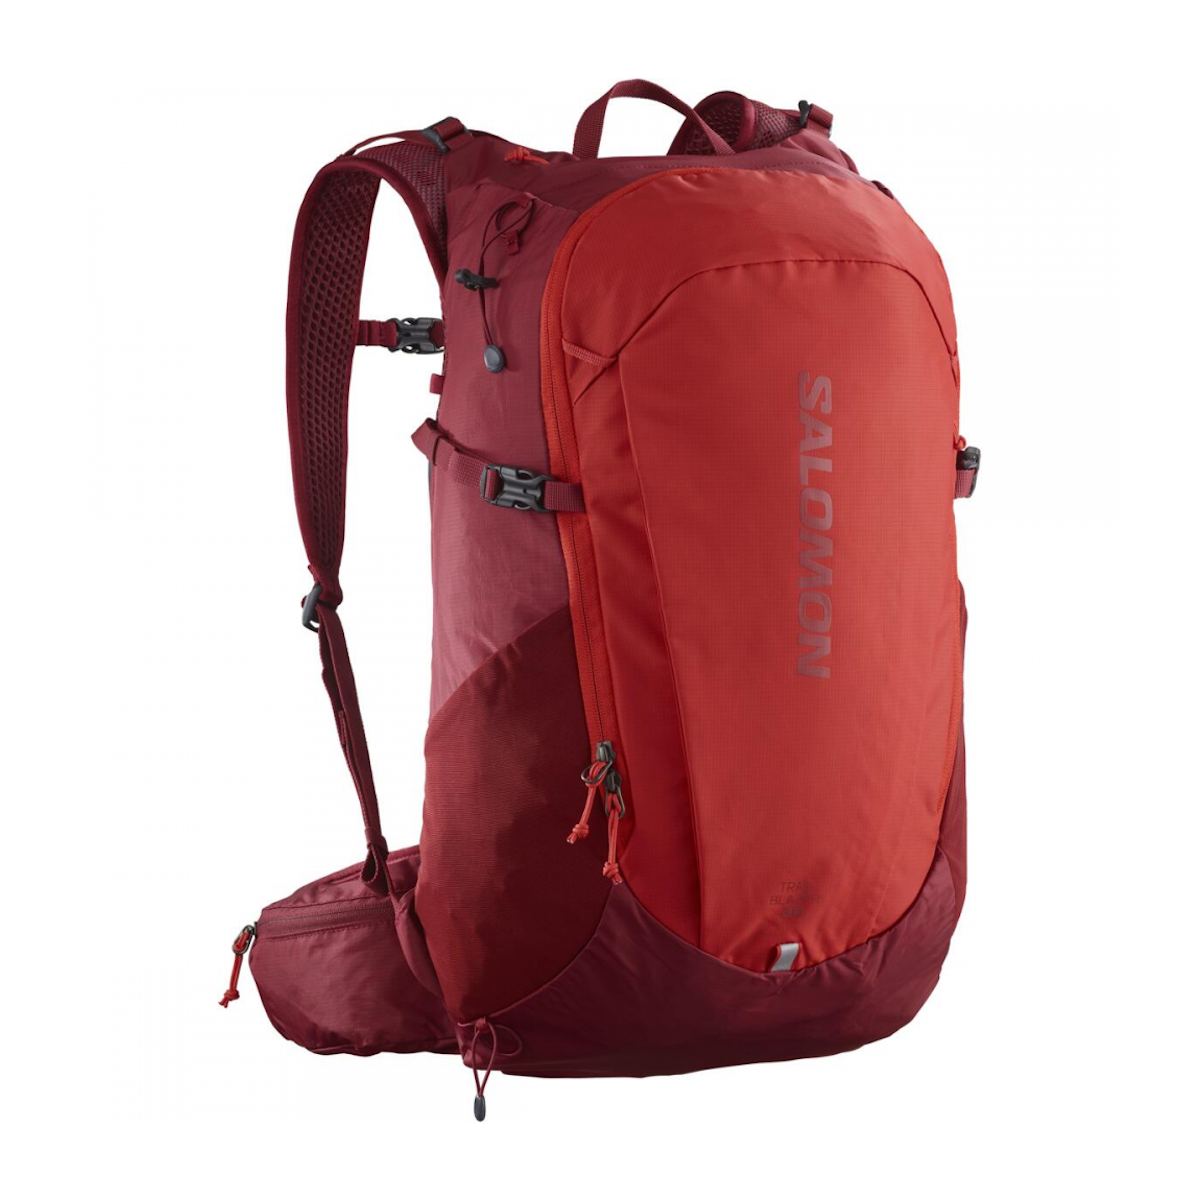 SALOMON TRAILBLAZER 30 backpack - red/dark red